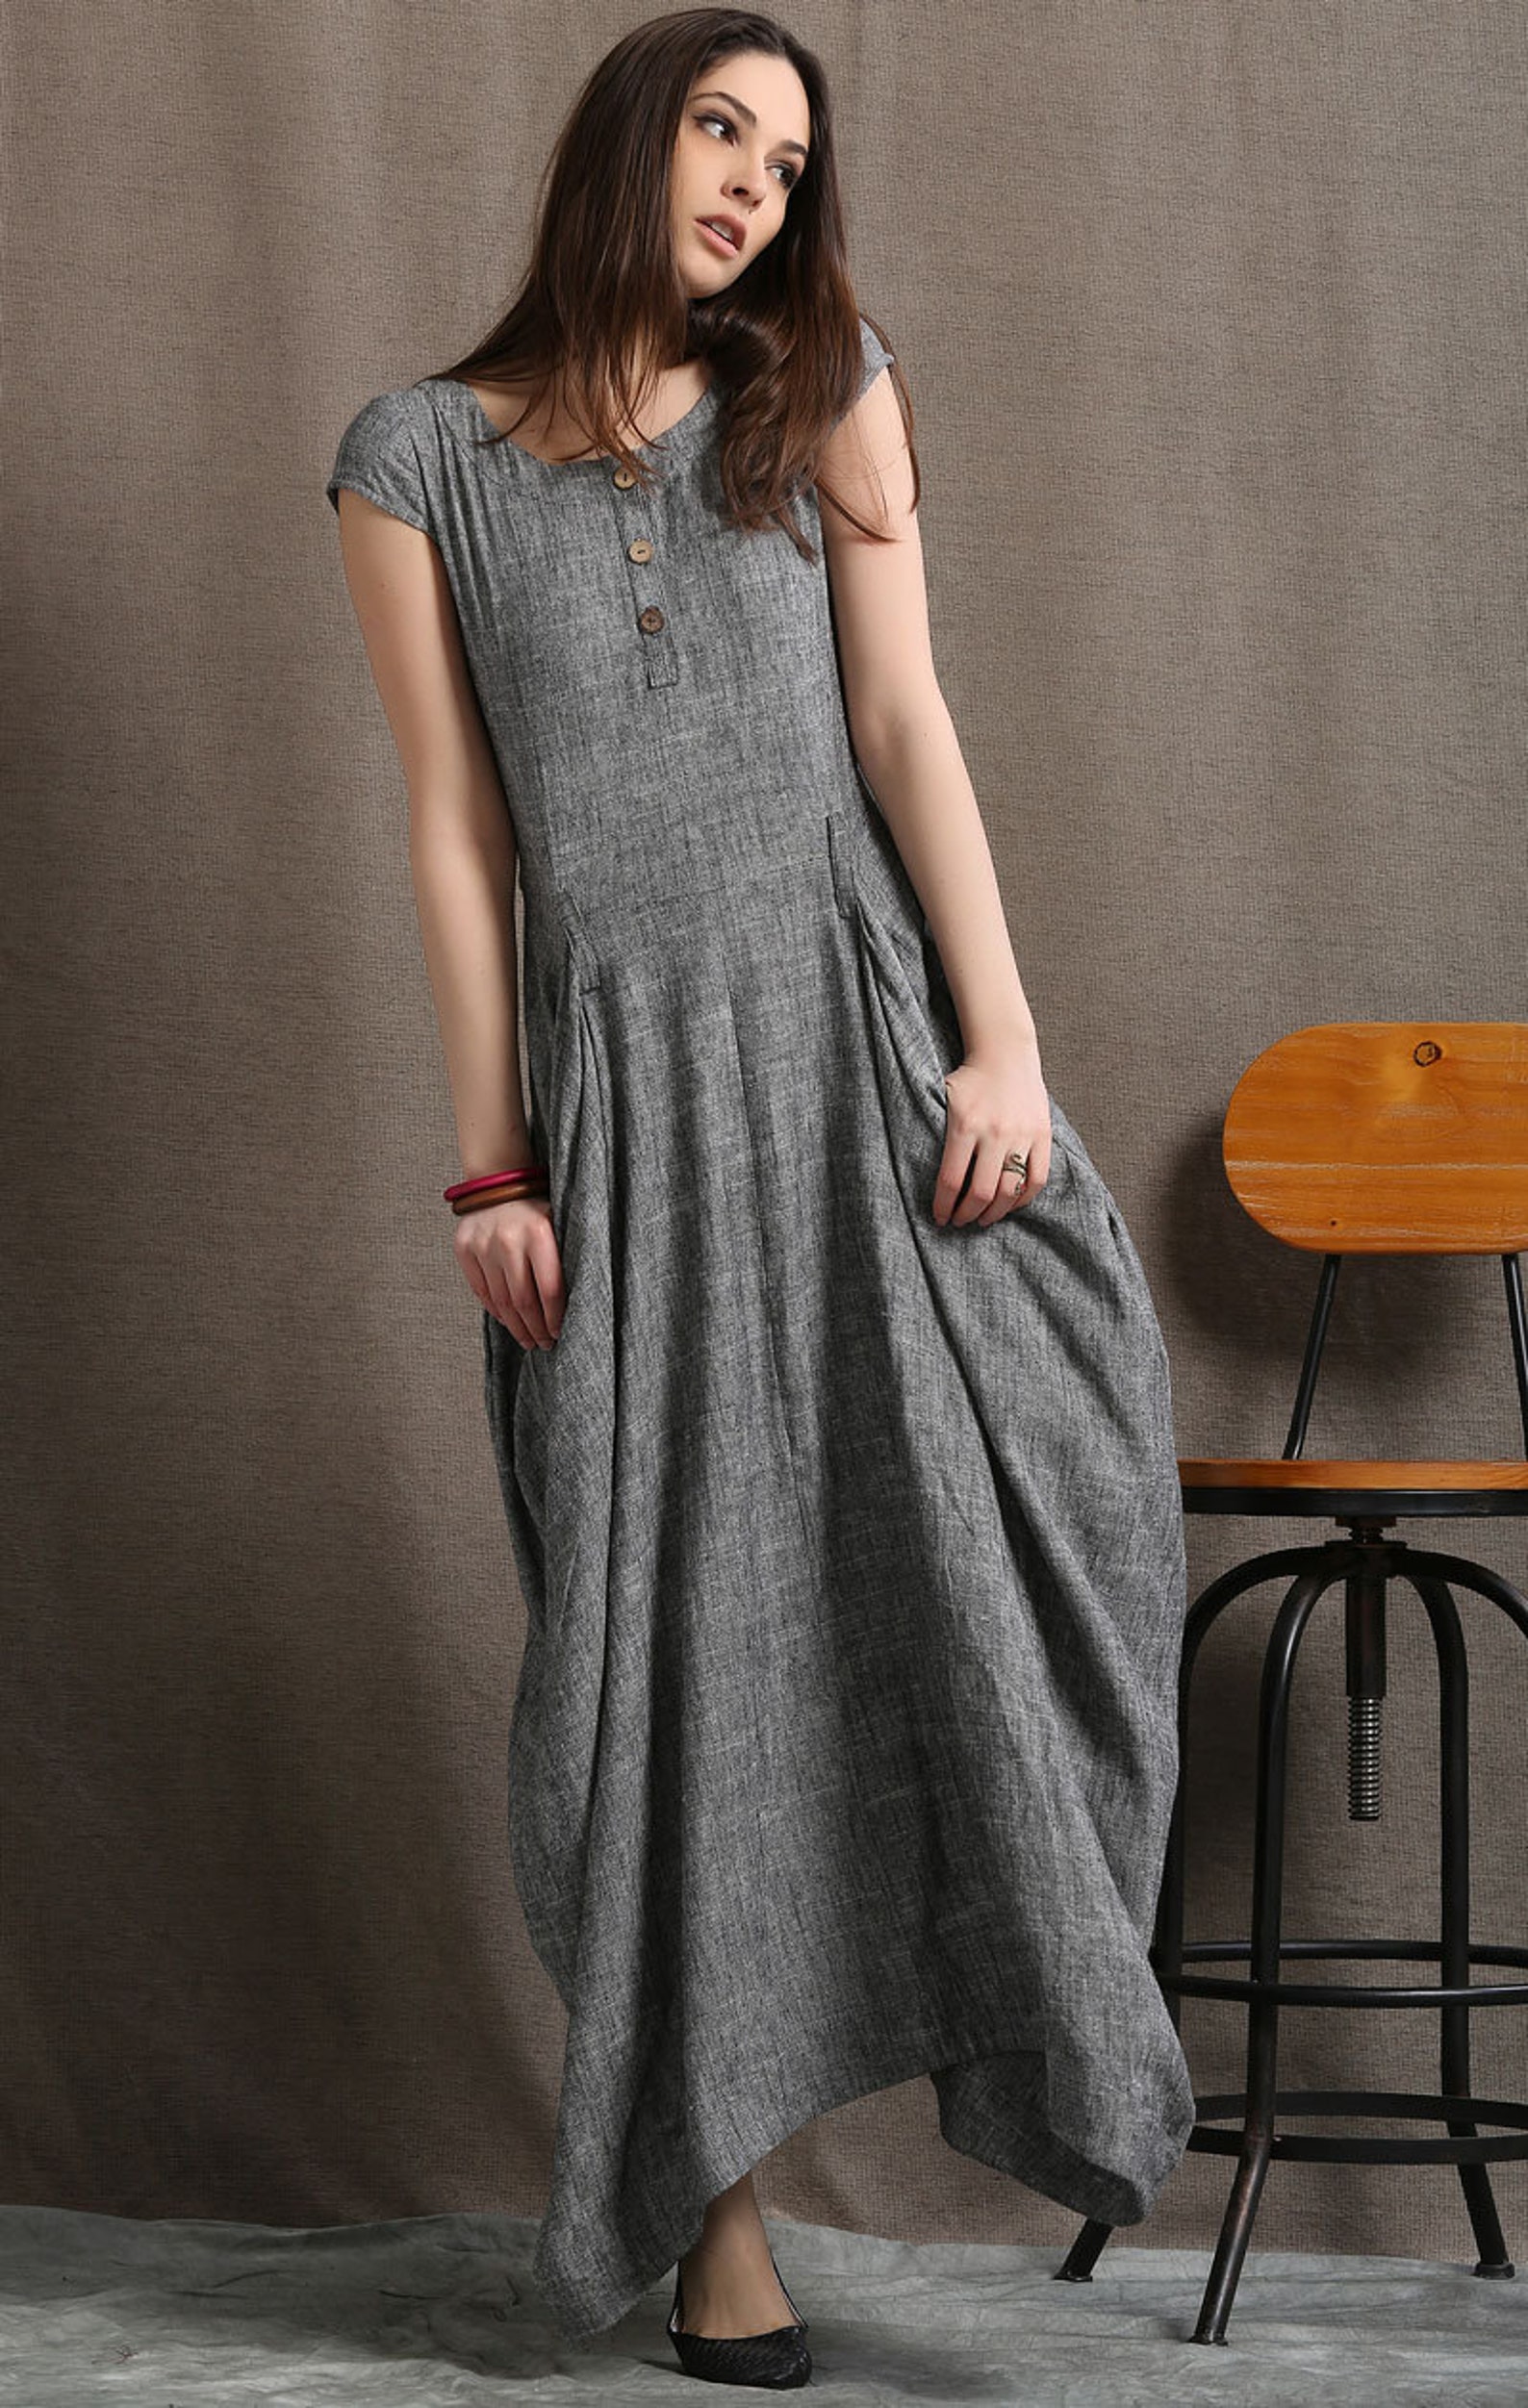 Gray Linen Dress Long Maxi Boho Style Short Sleeved Shift | Etsy